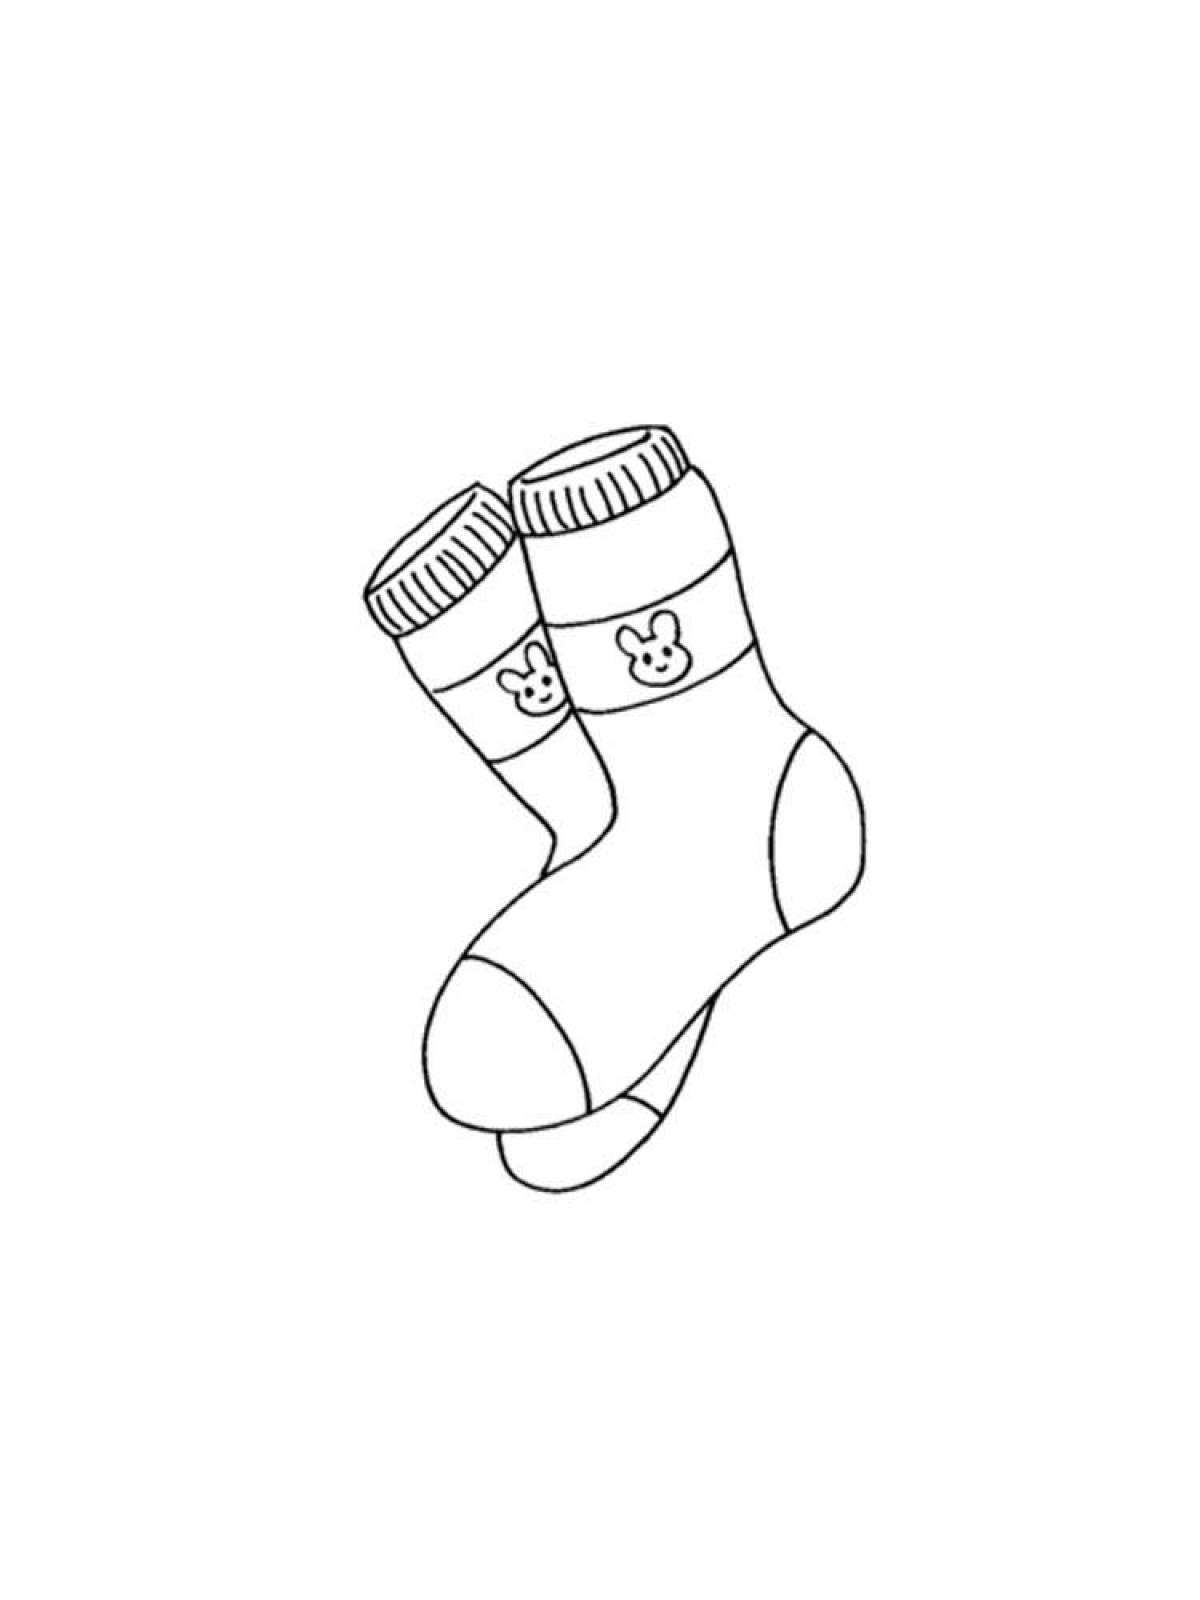 Socks #3